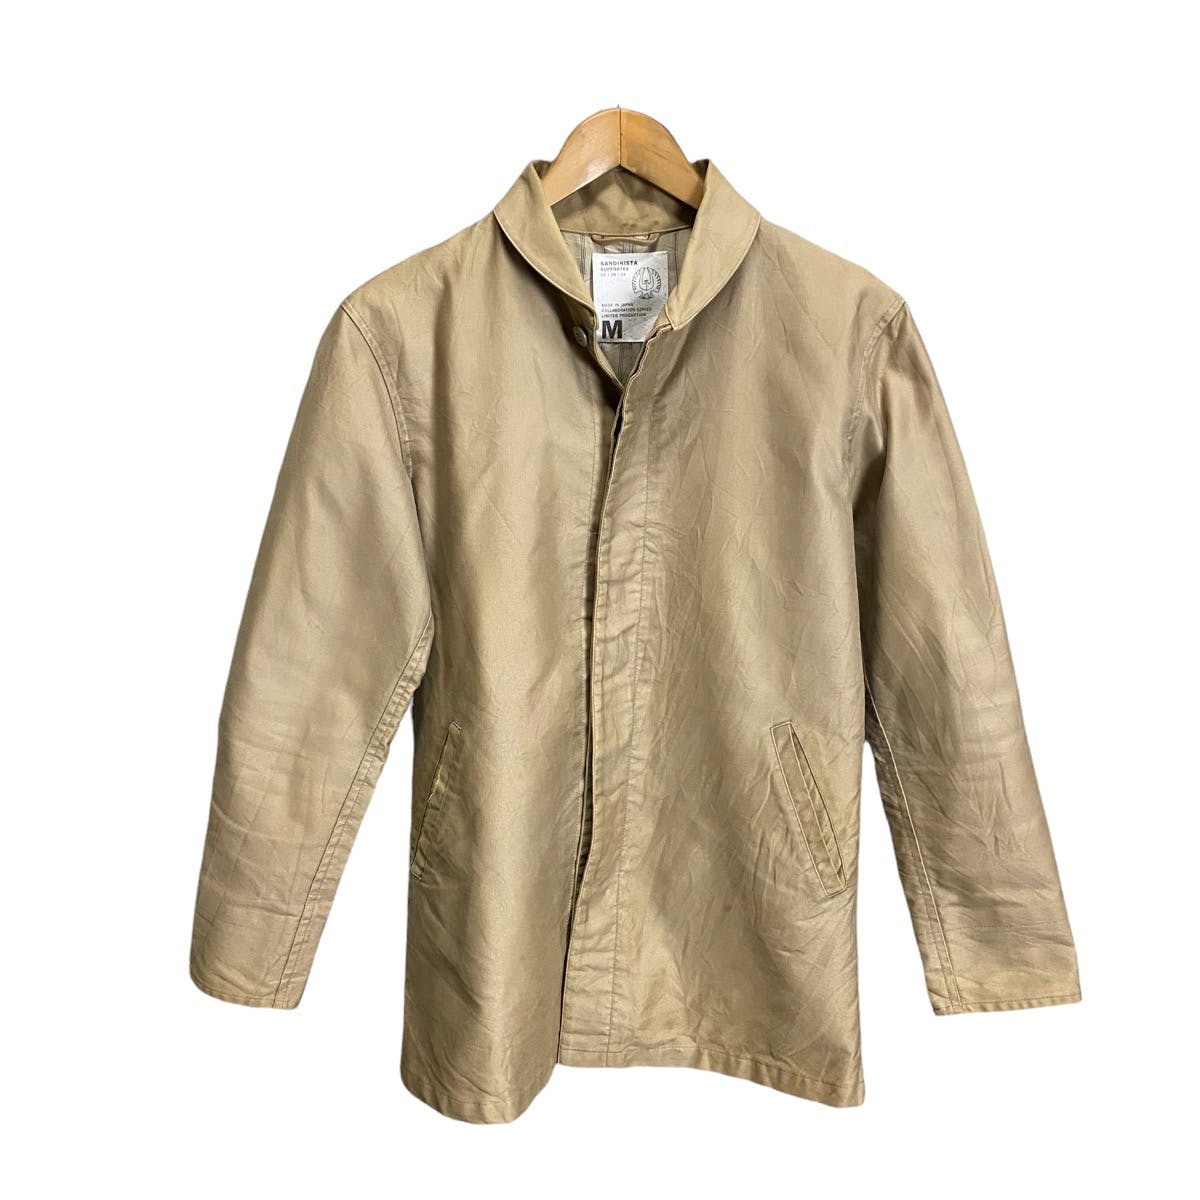 Japanese Brand - Vintage Sandinista button up jacket - 1